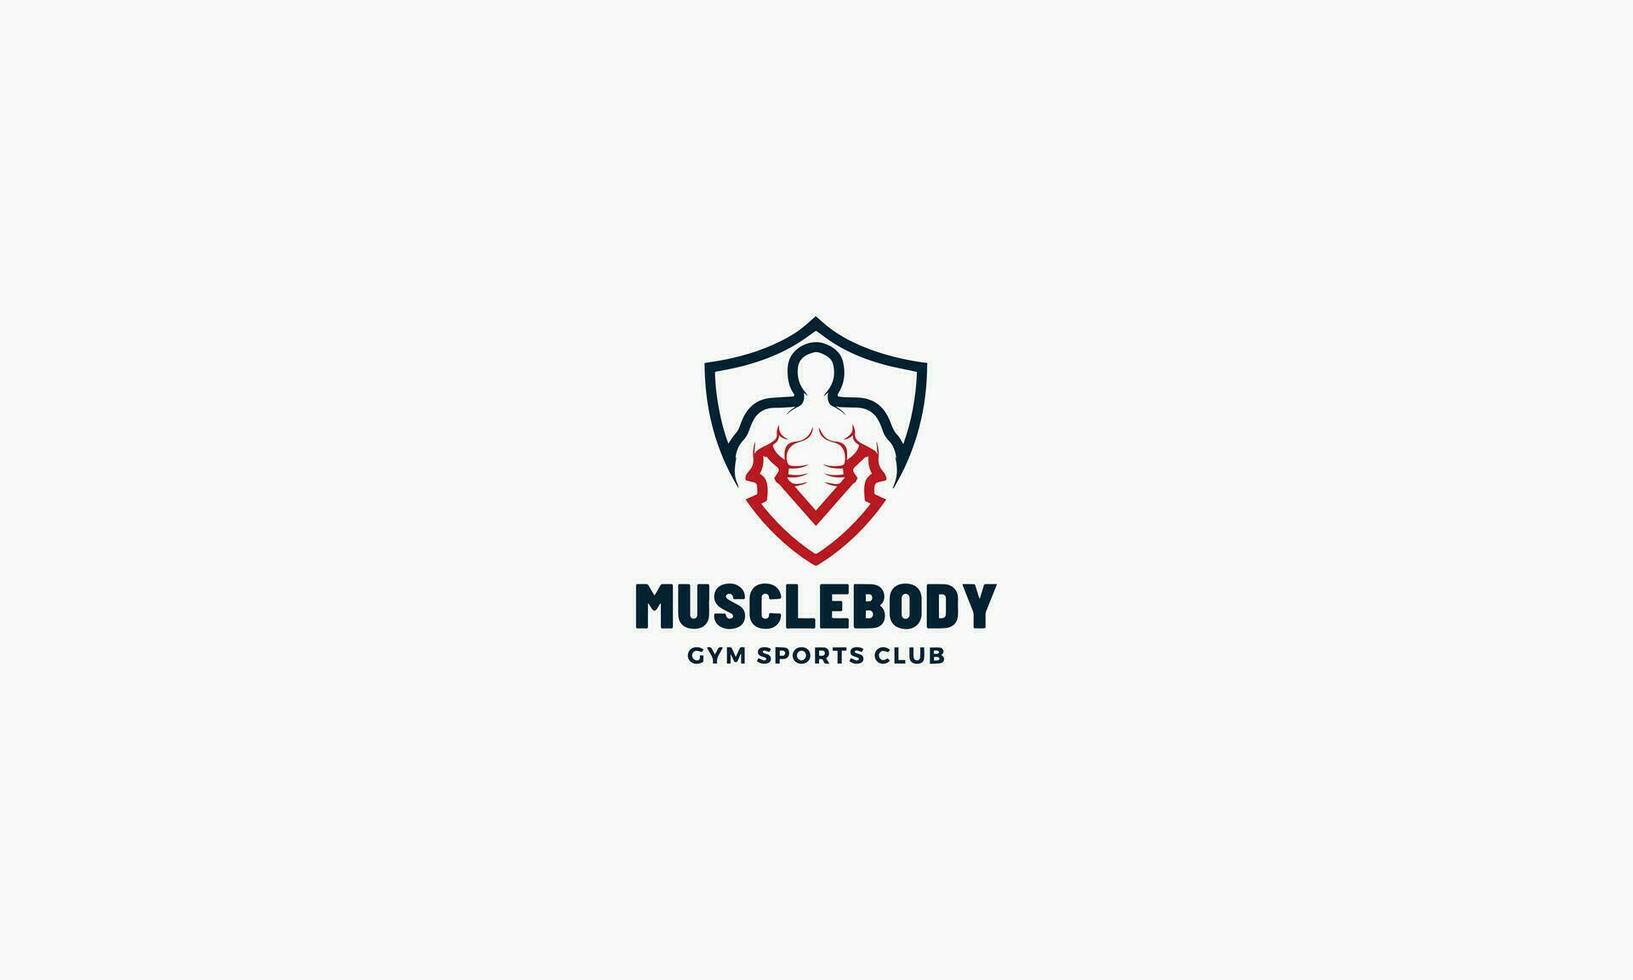 Gym bodybuilding kondition klubb logotyp design ikon vektor